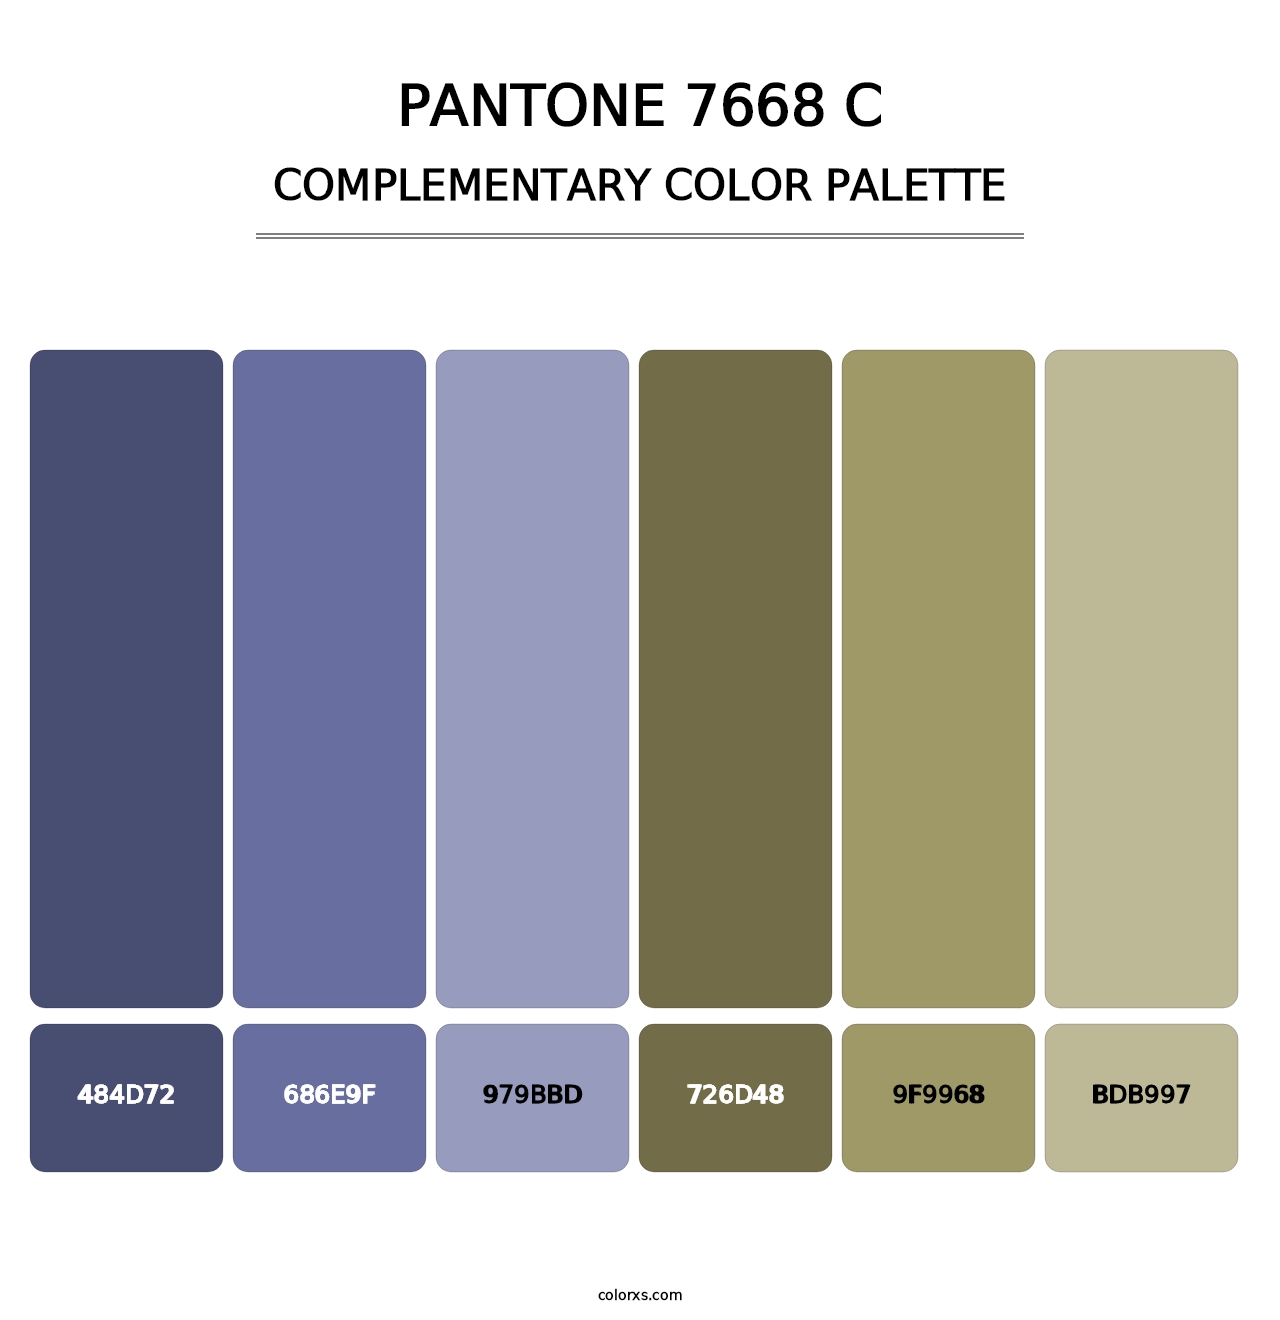 PANTONE 7668 C - Complementary Color Palette